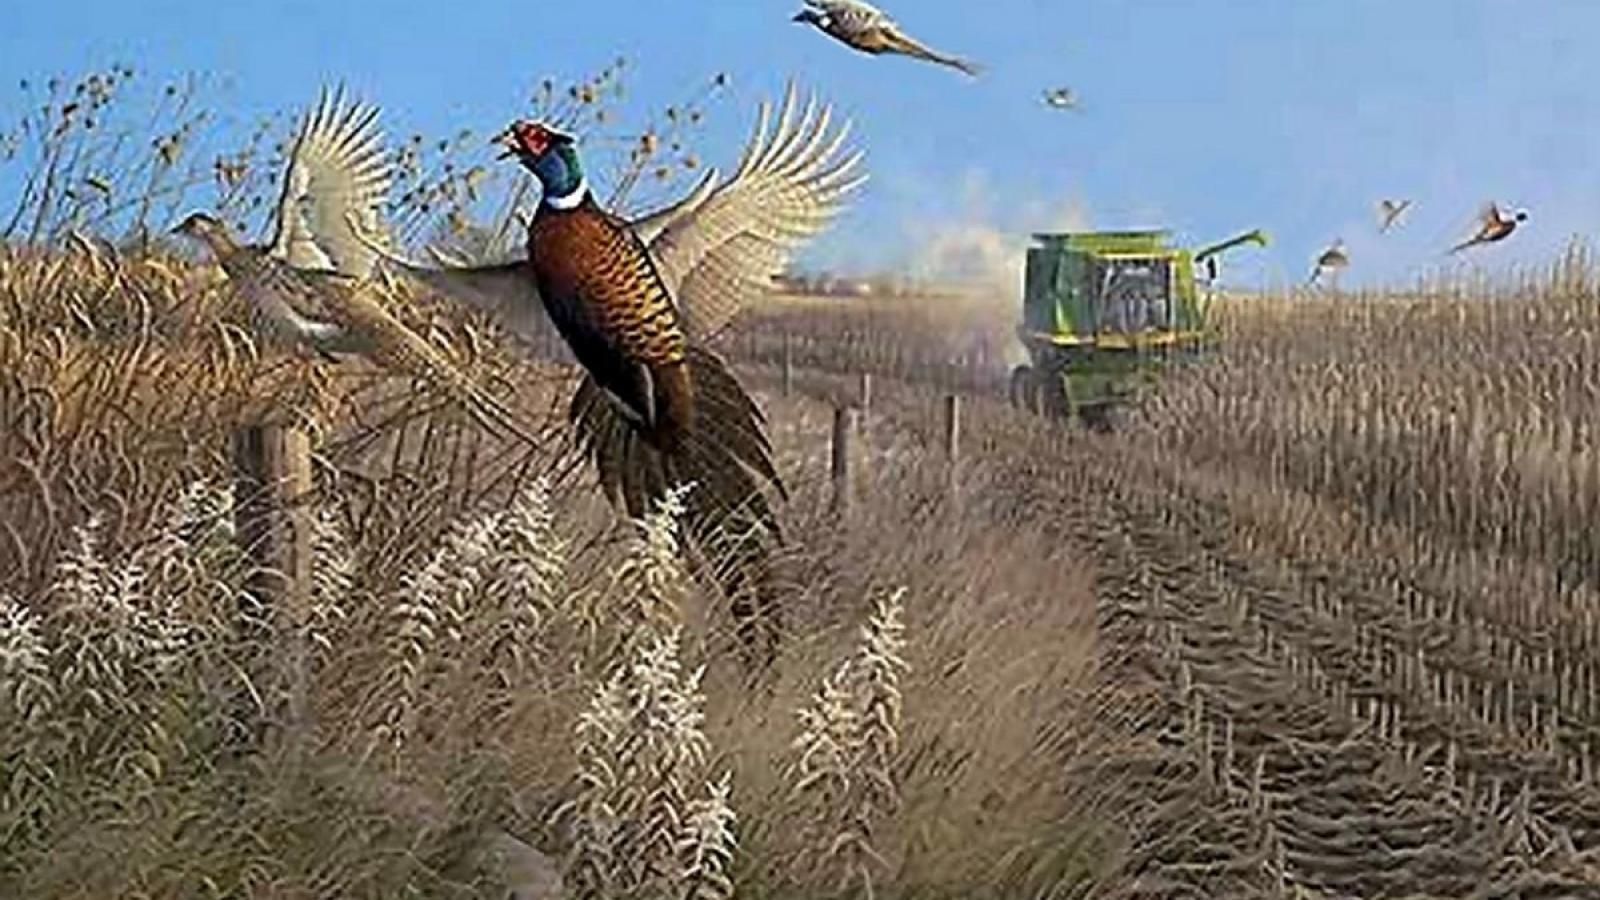 Pheasant Hunting Desktop Wallpaper Free Pheasant Hunting Desktop Background